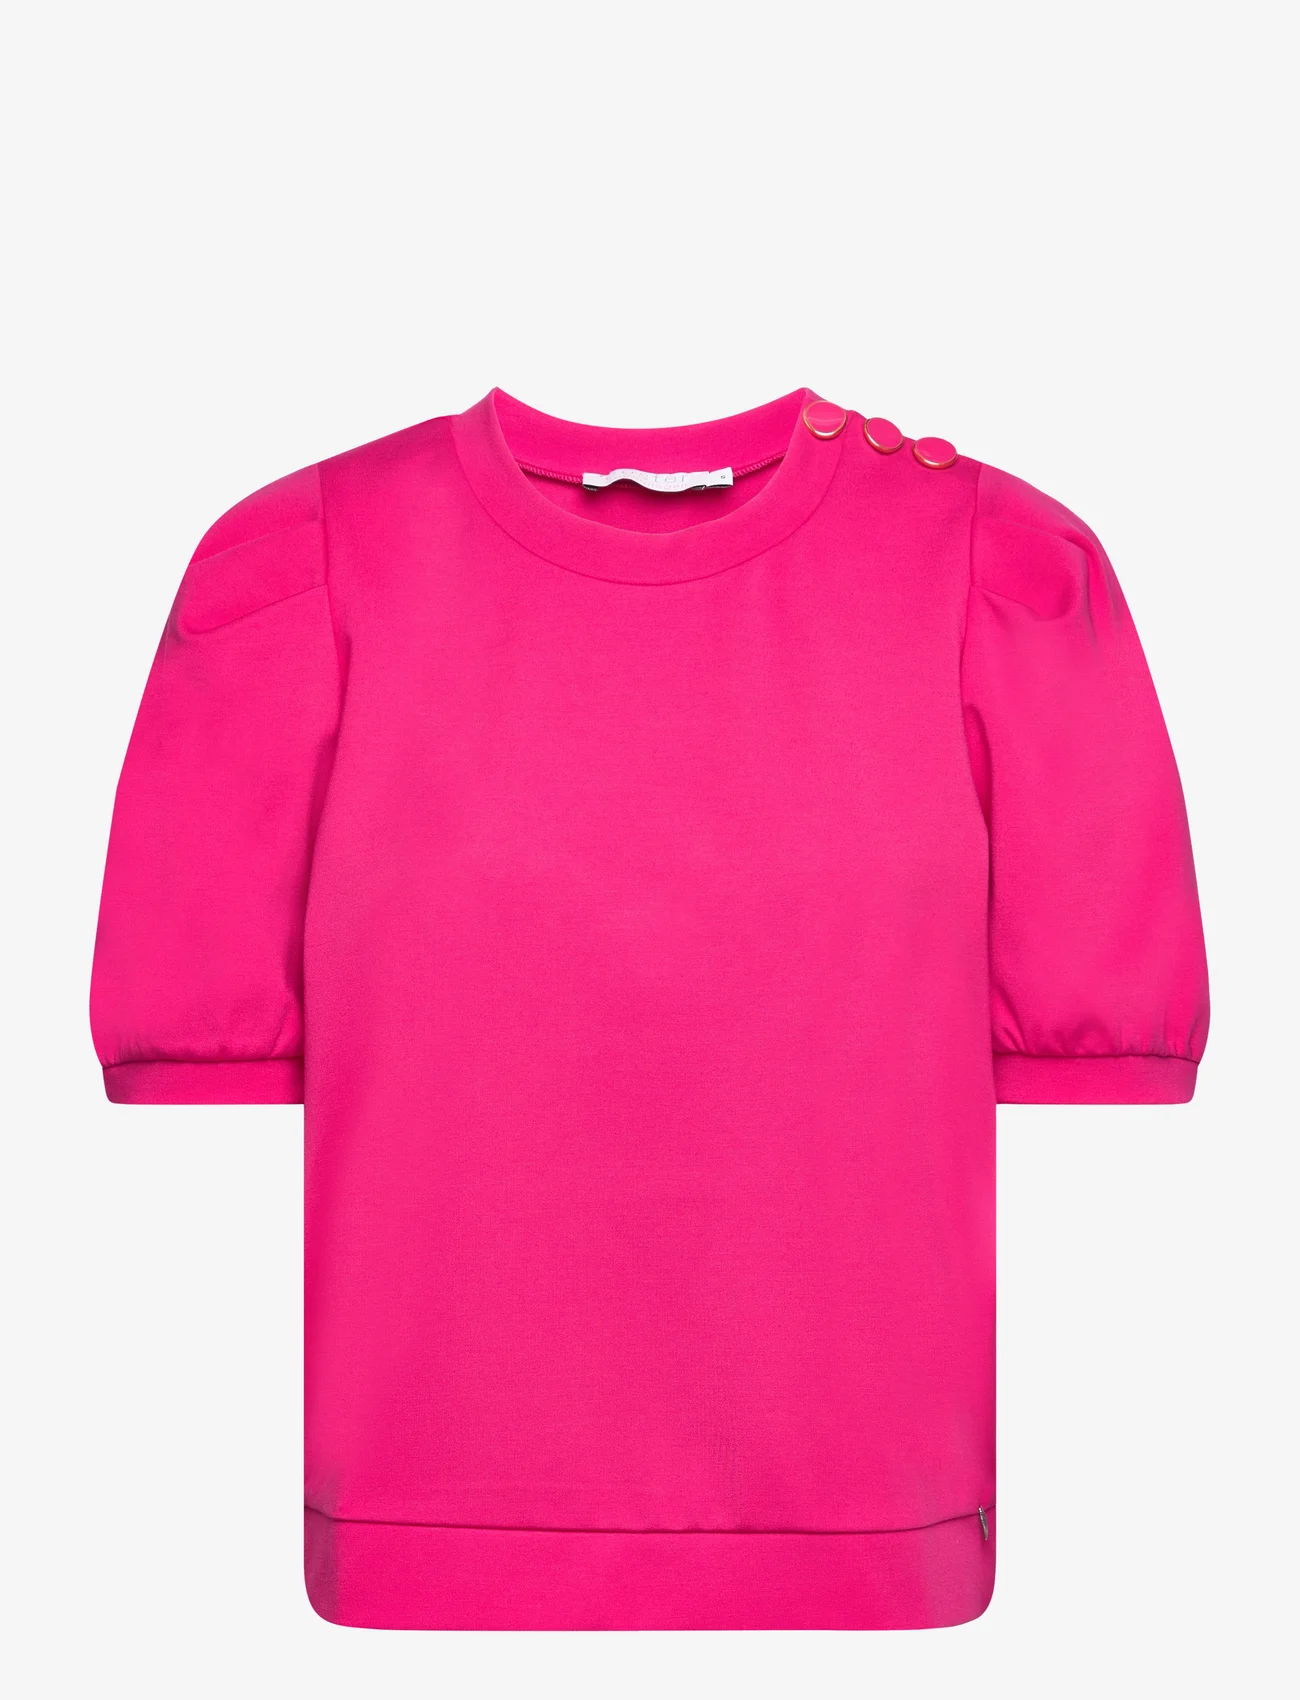 Coster Copenhagen - Sweat shirt with pleats - t-krekli - bright sunrise - 0